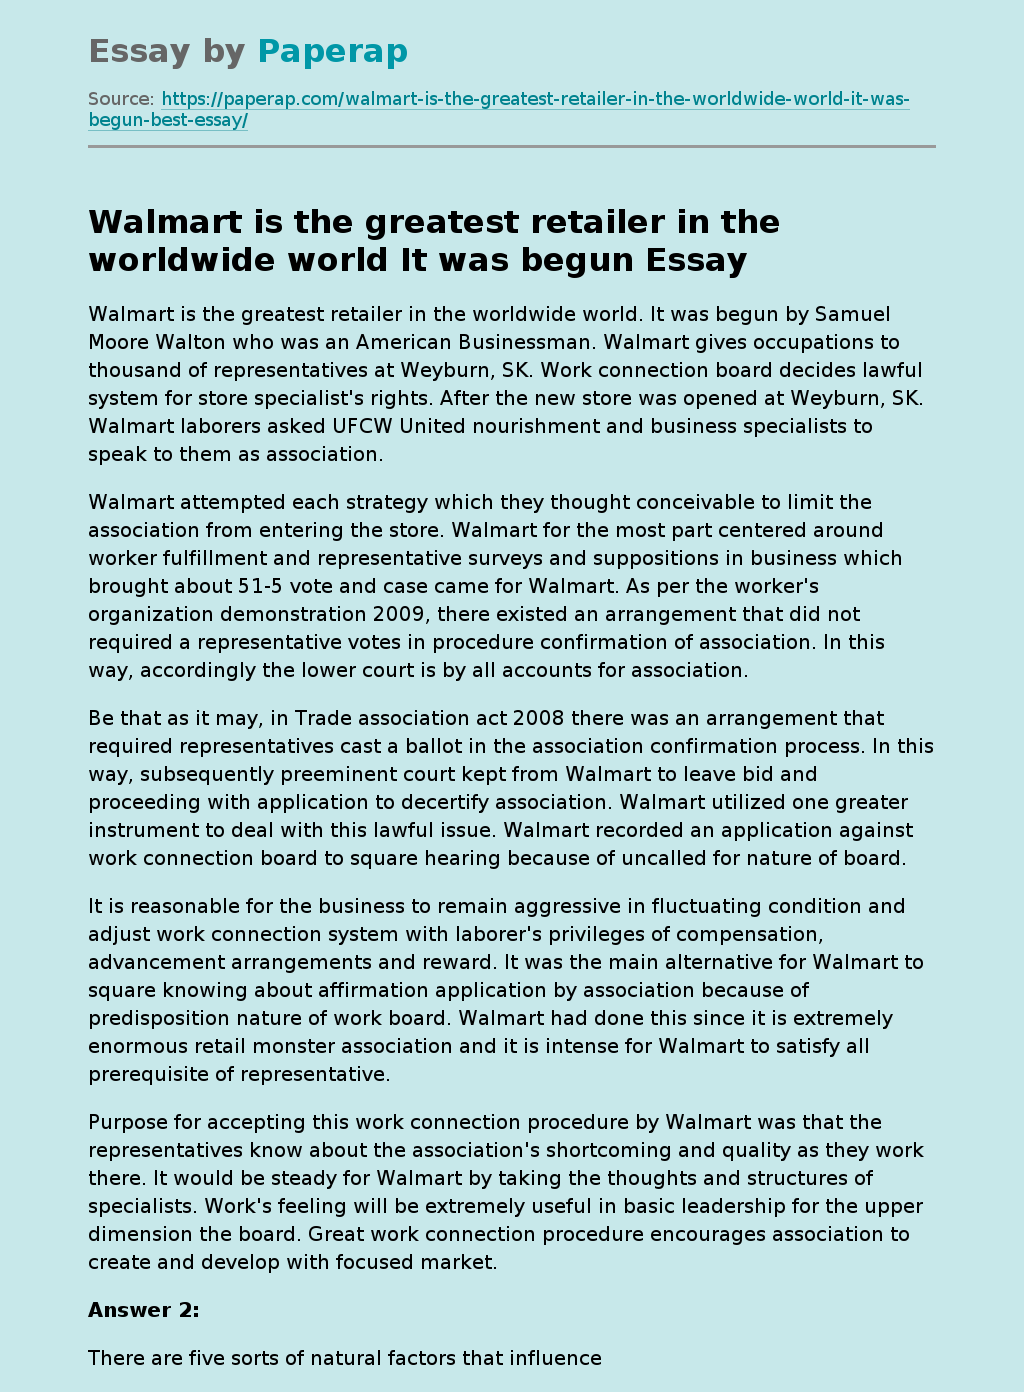 Walmart Is the Greatest Retailer in the Worldwide World It Was Begun